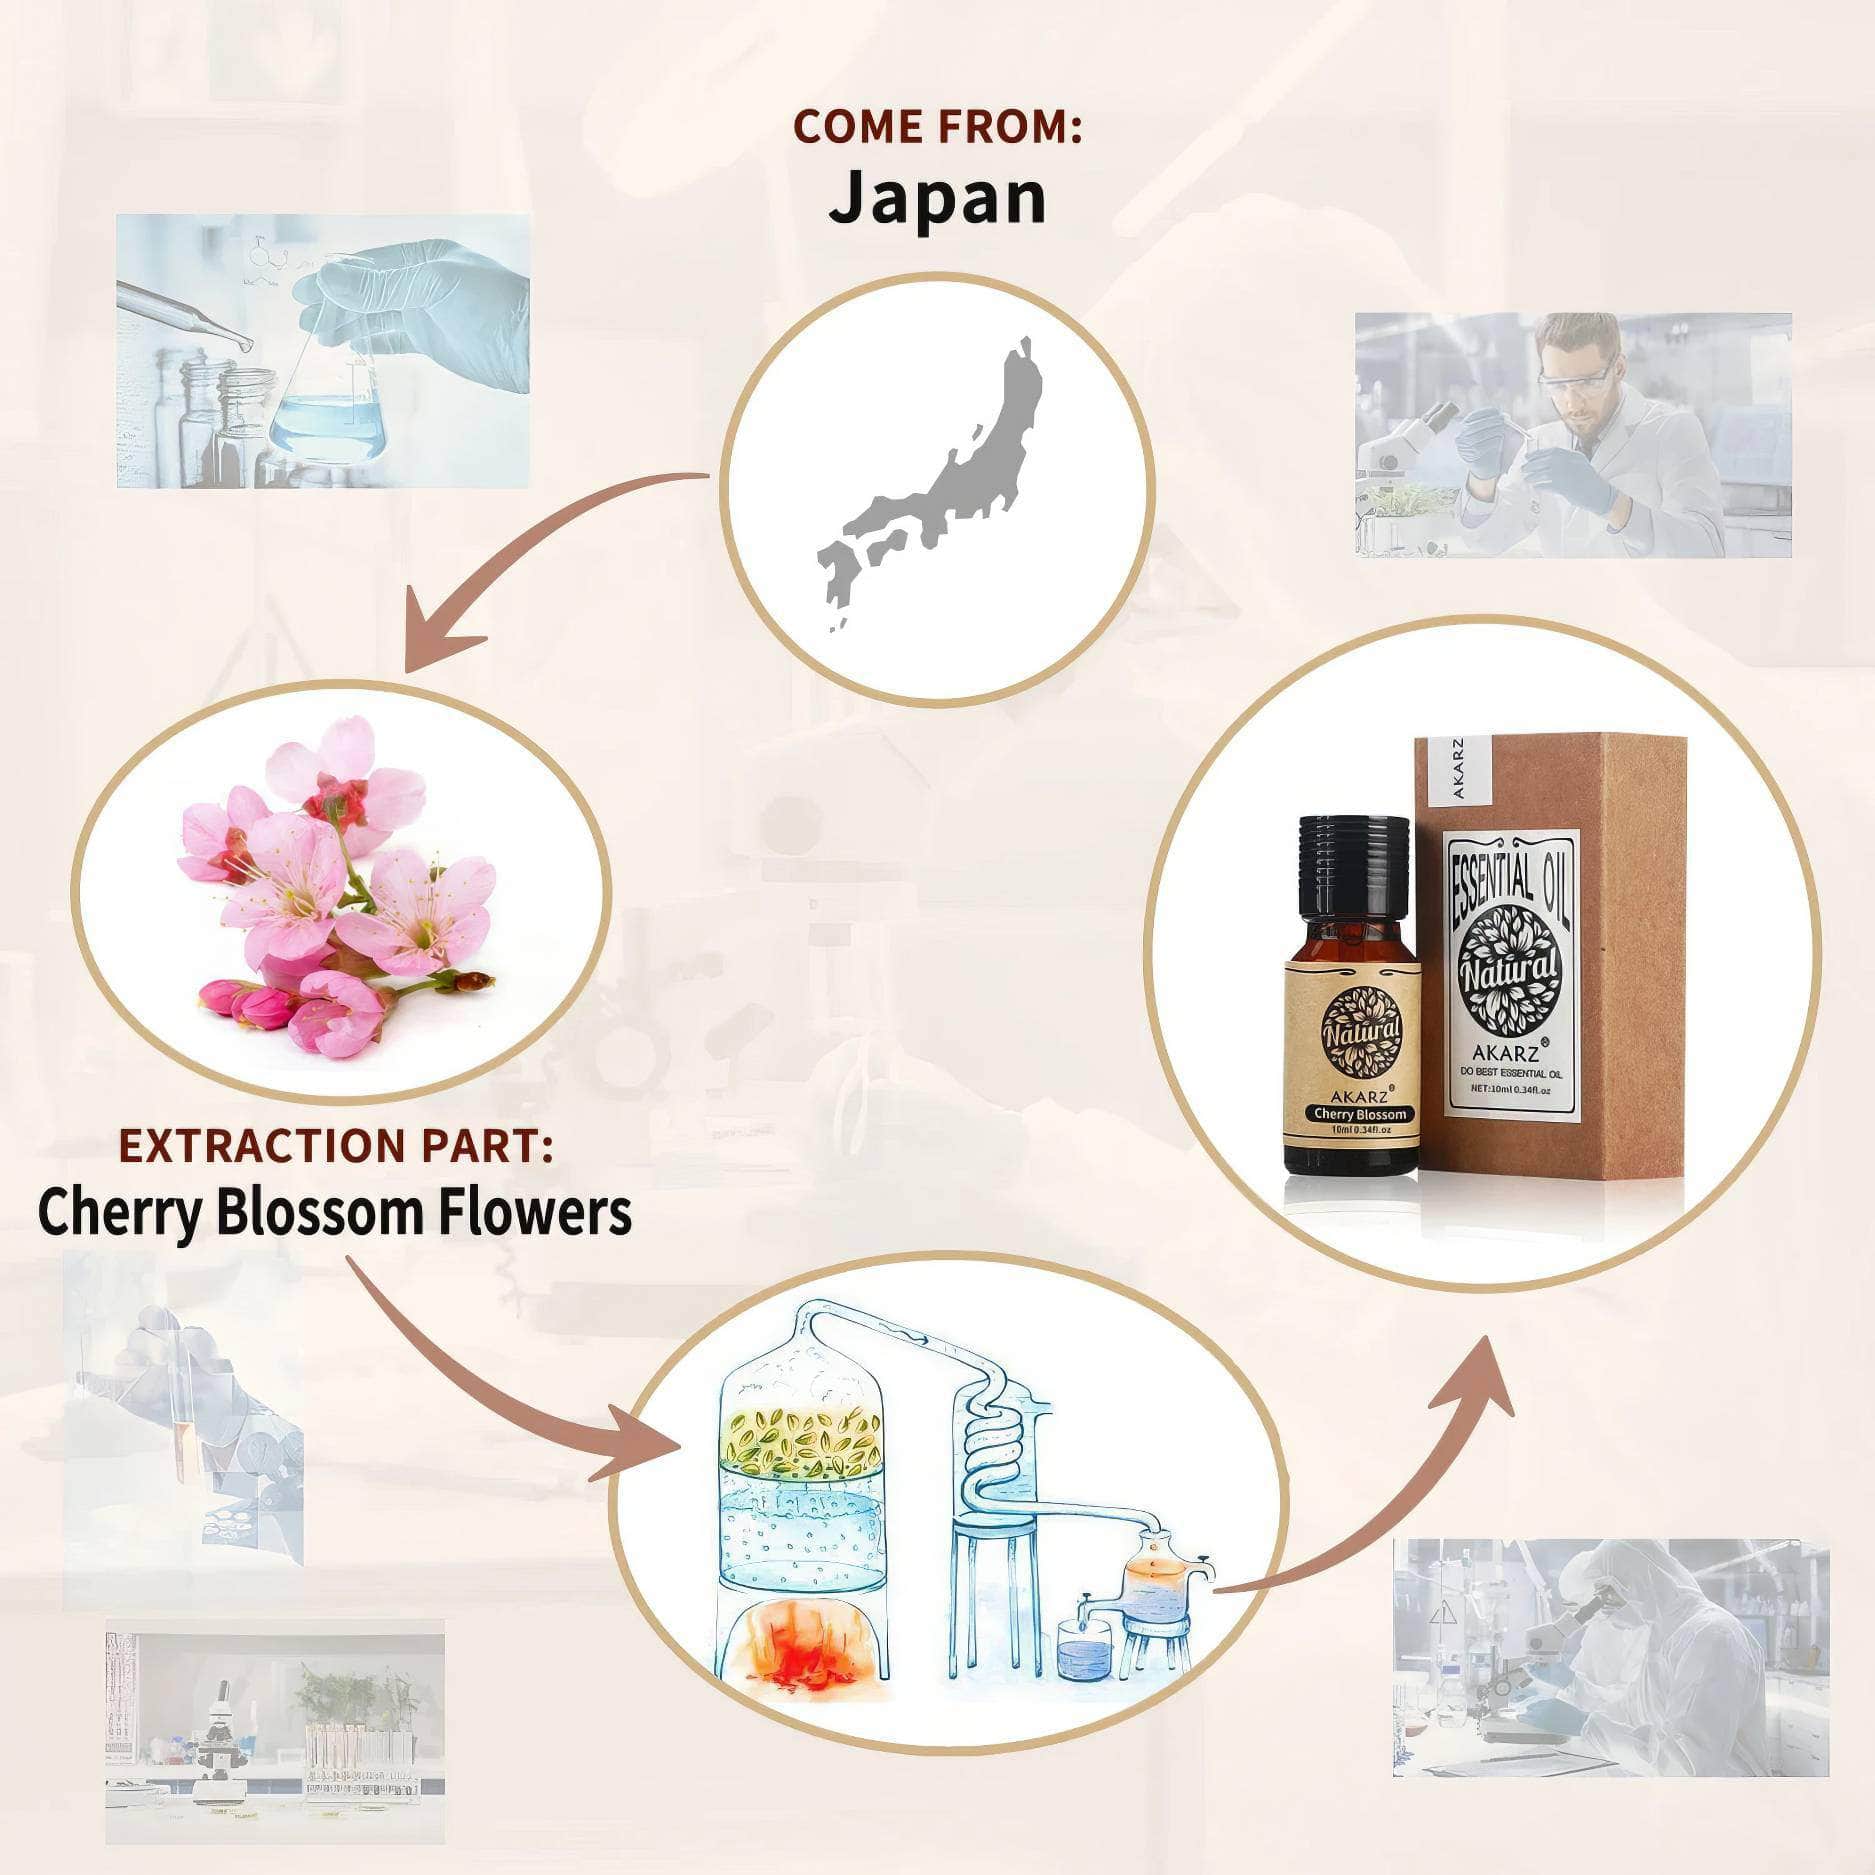 AKARZ™ Cherry Blossom Essential Oil: Natural Skin Whitening, Restores Elasticity, Relaxation